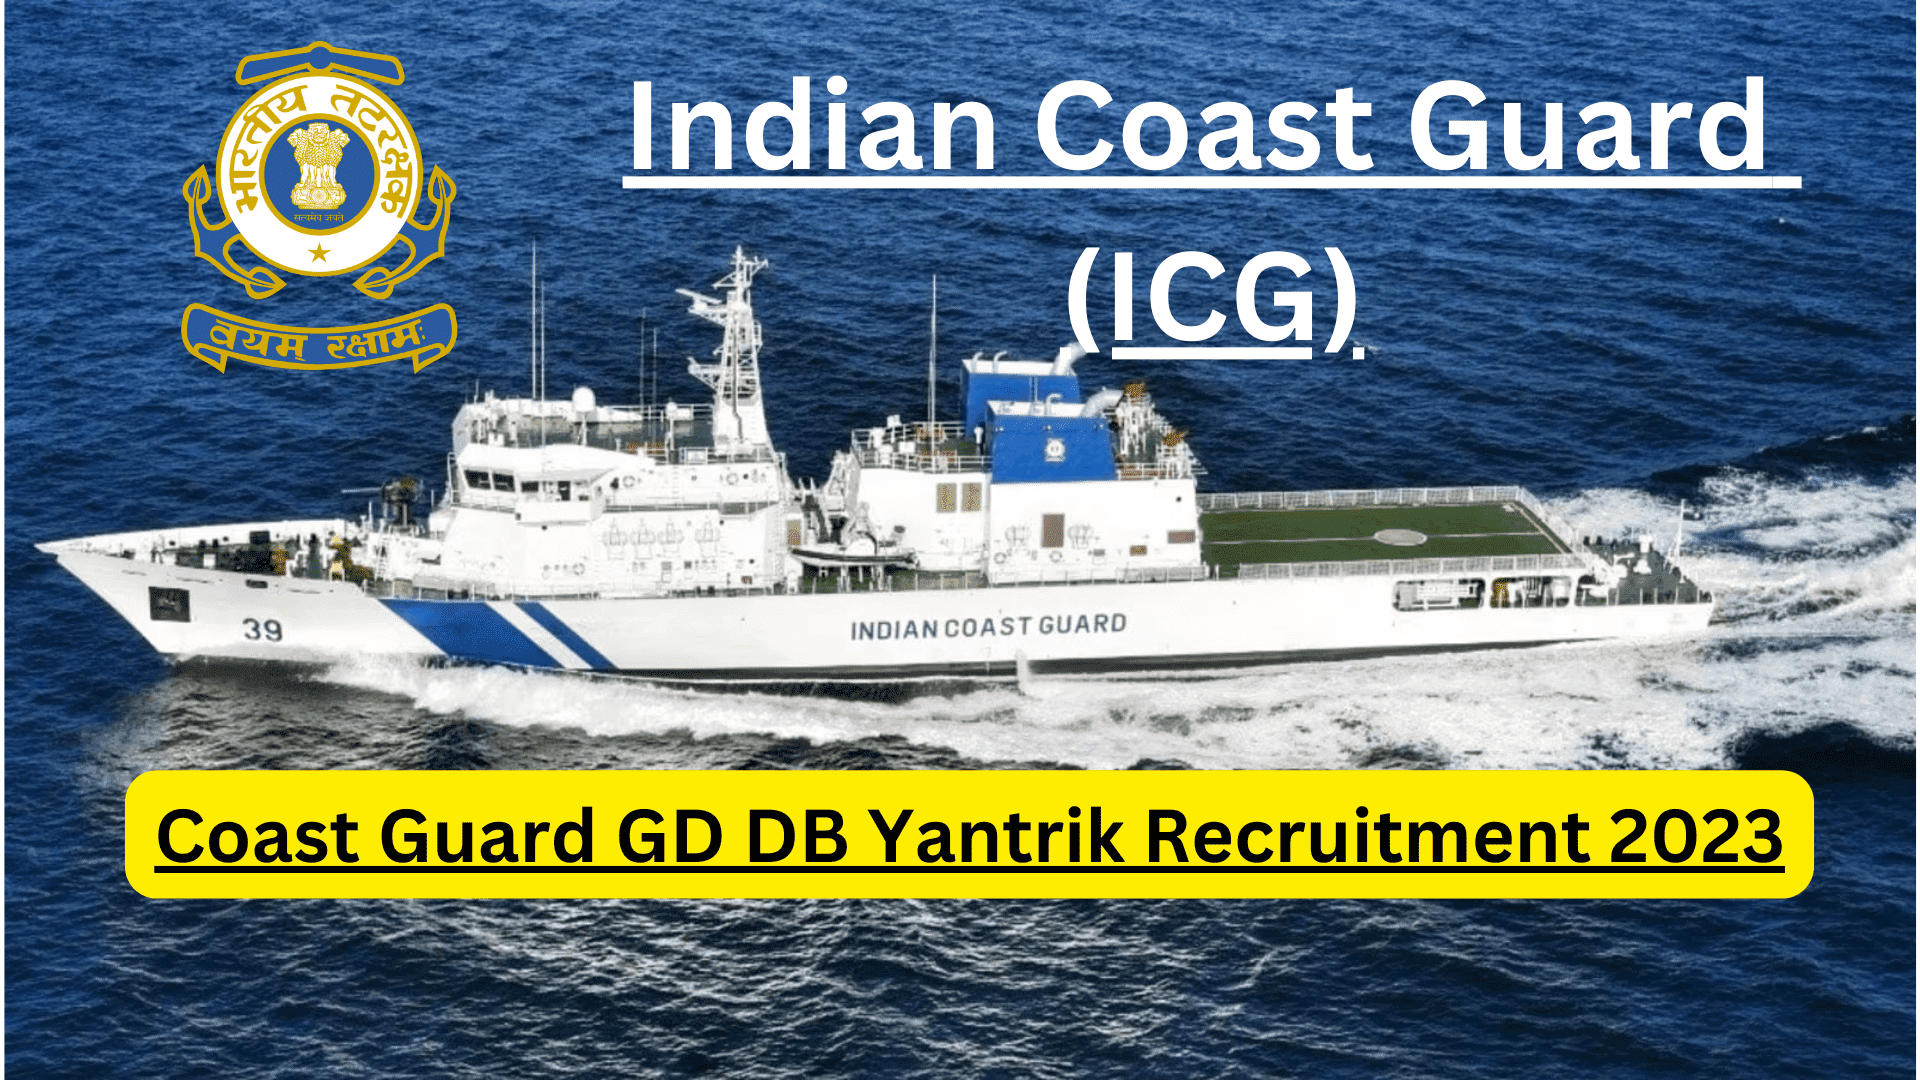 Coast Guard GD DB Yantrik Recruitment 2023